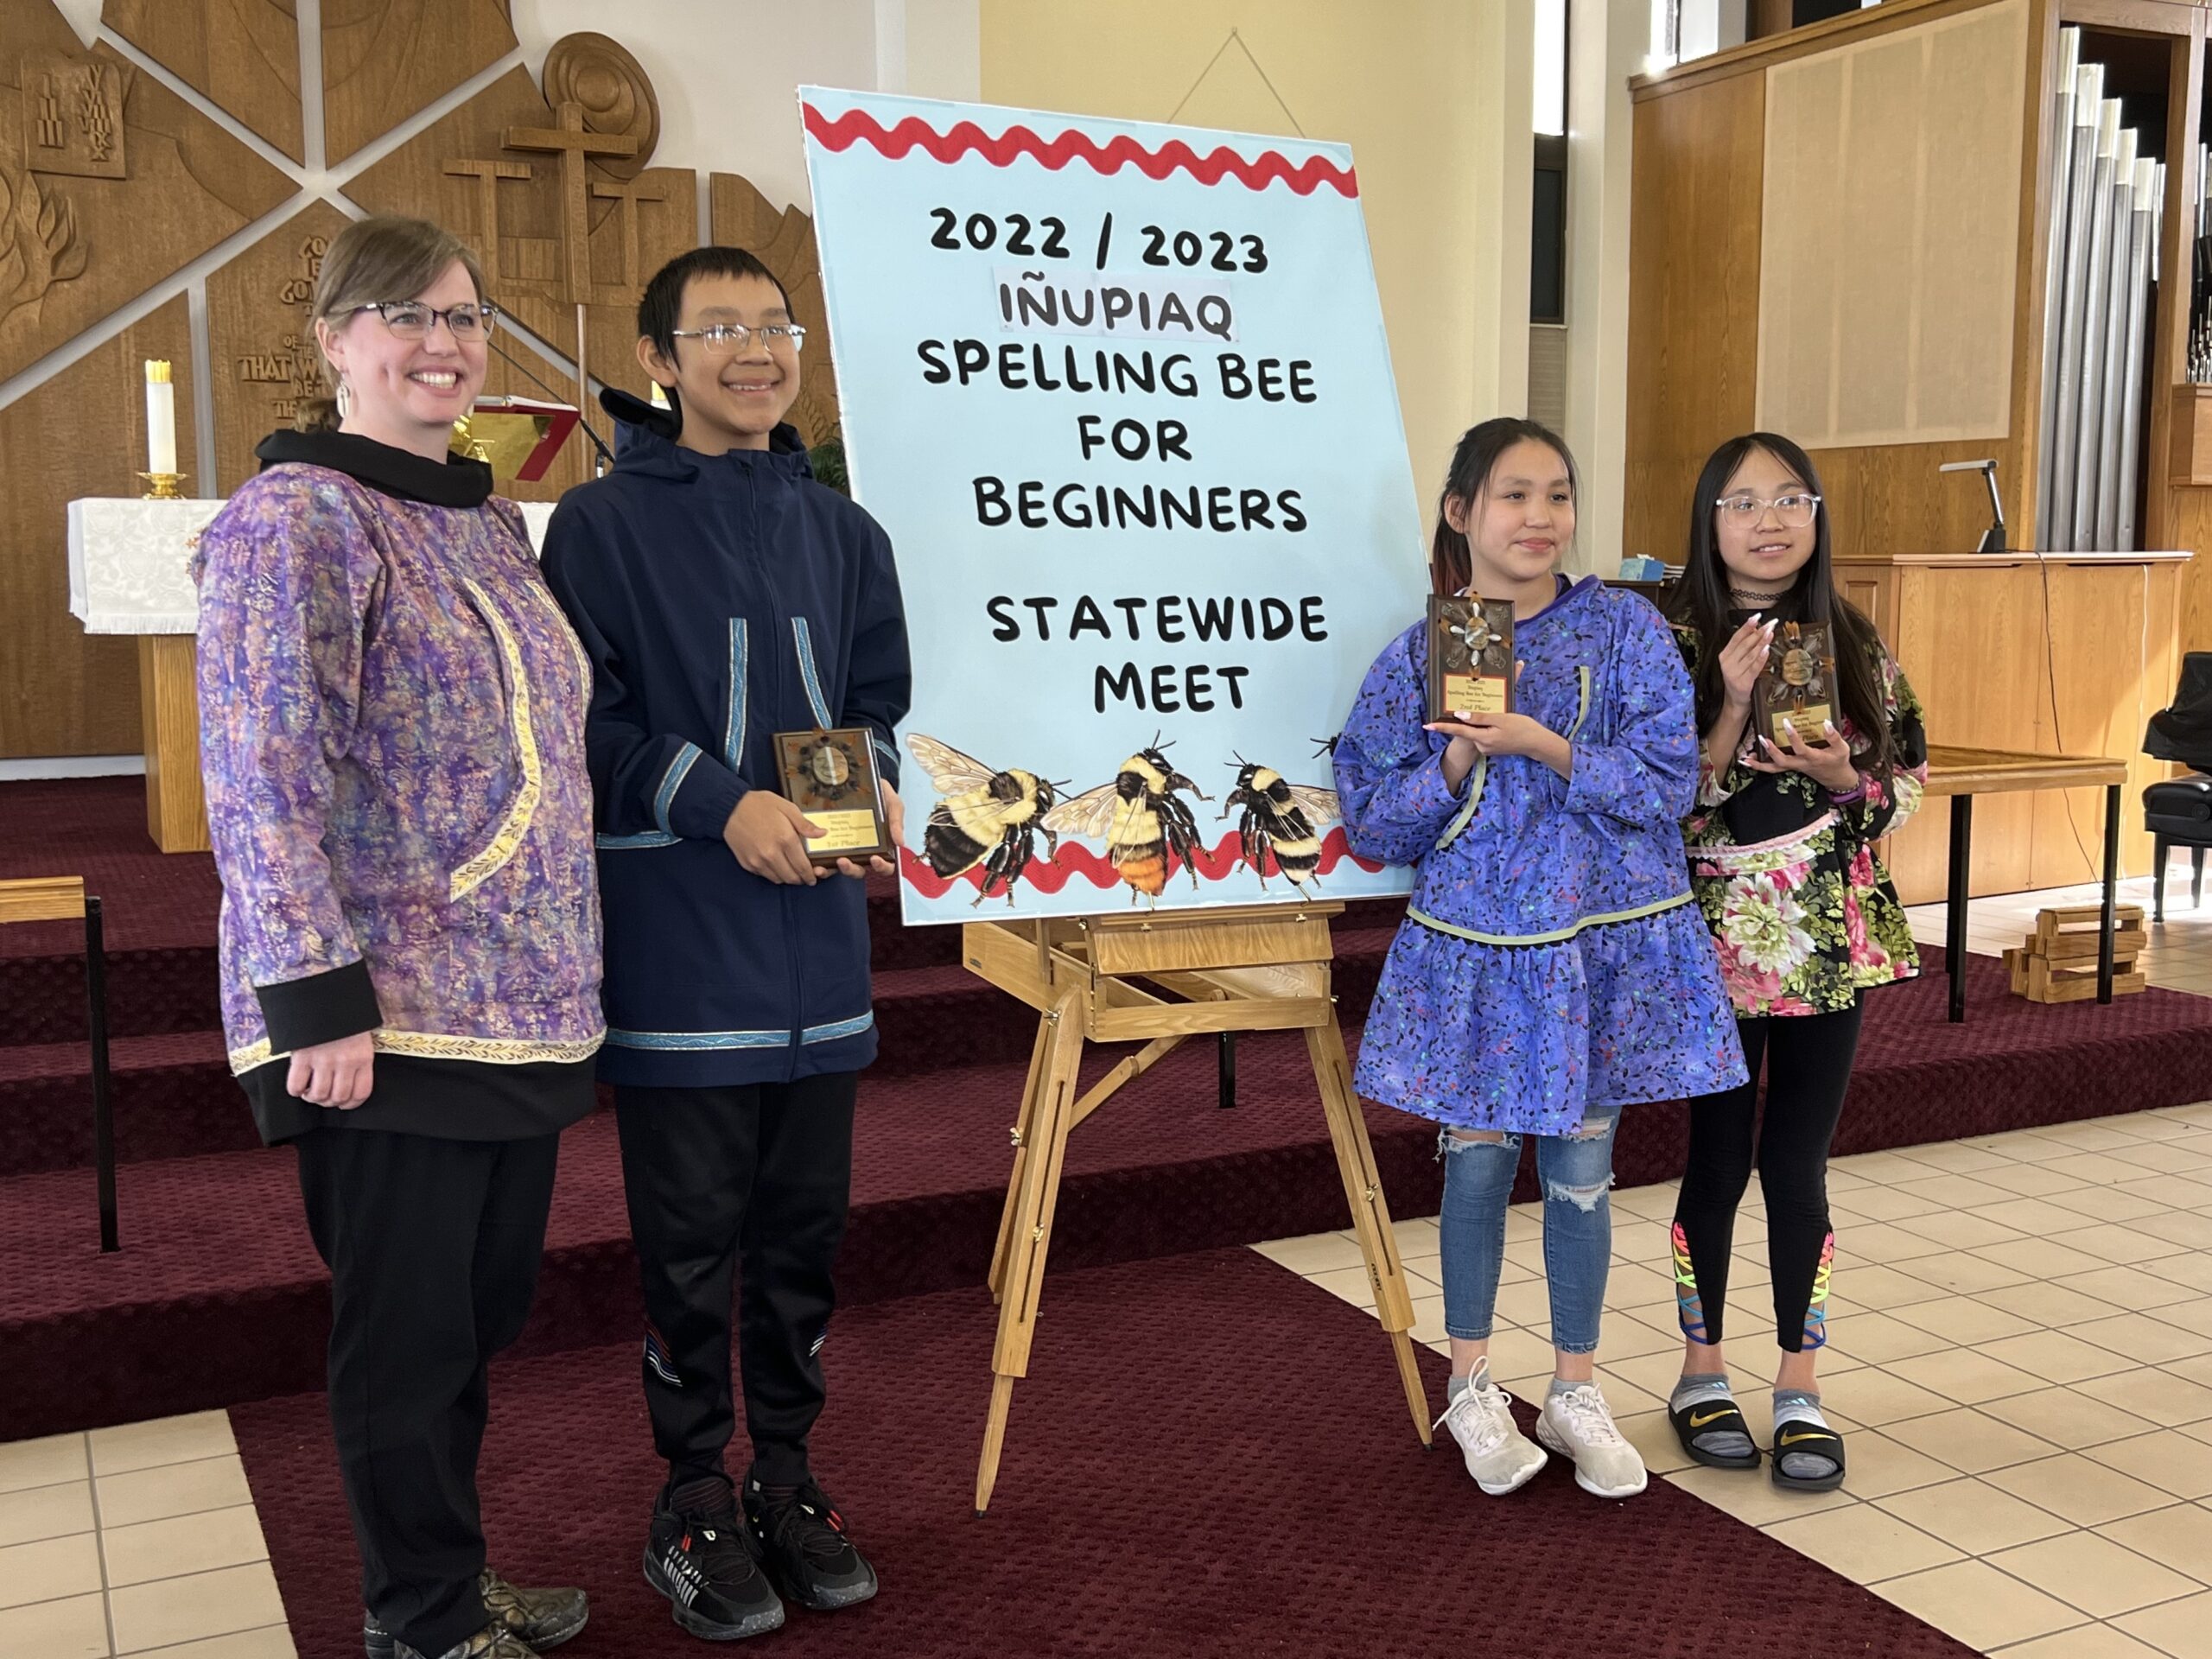 Inupiaq spelling bee winners